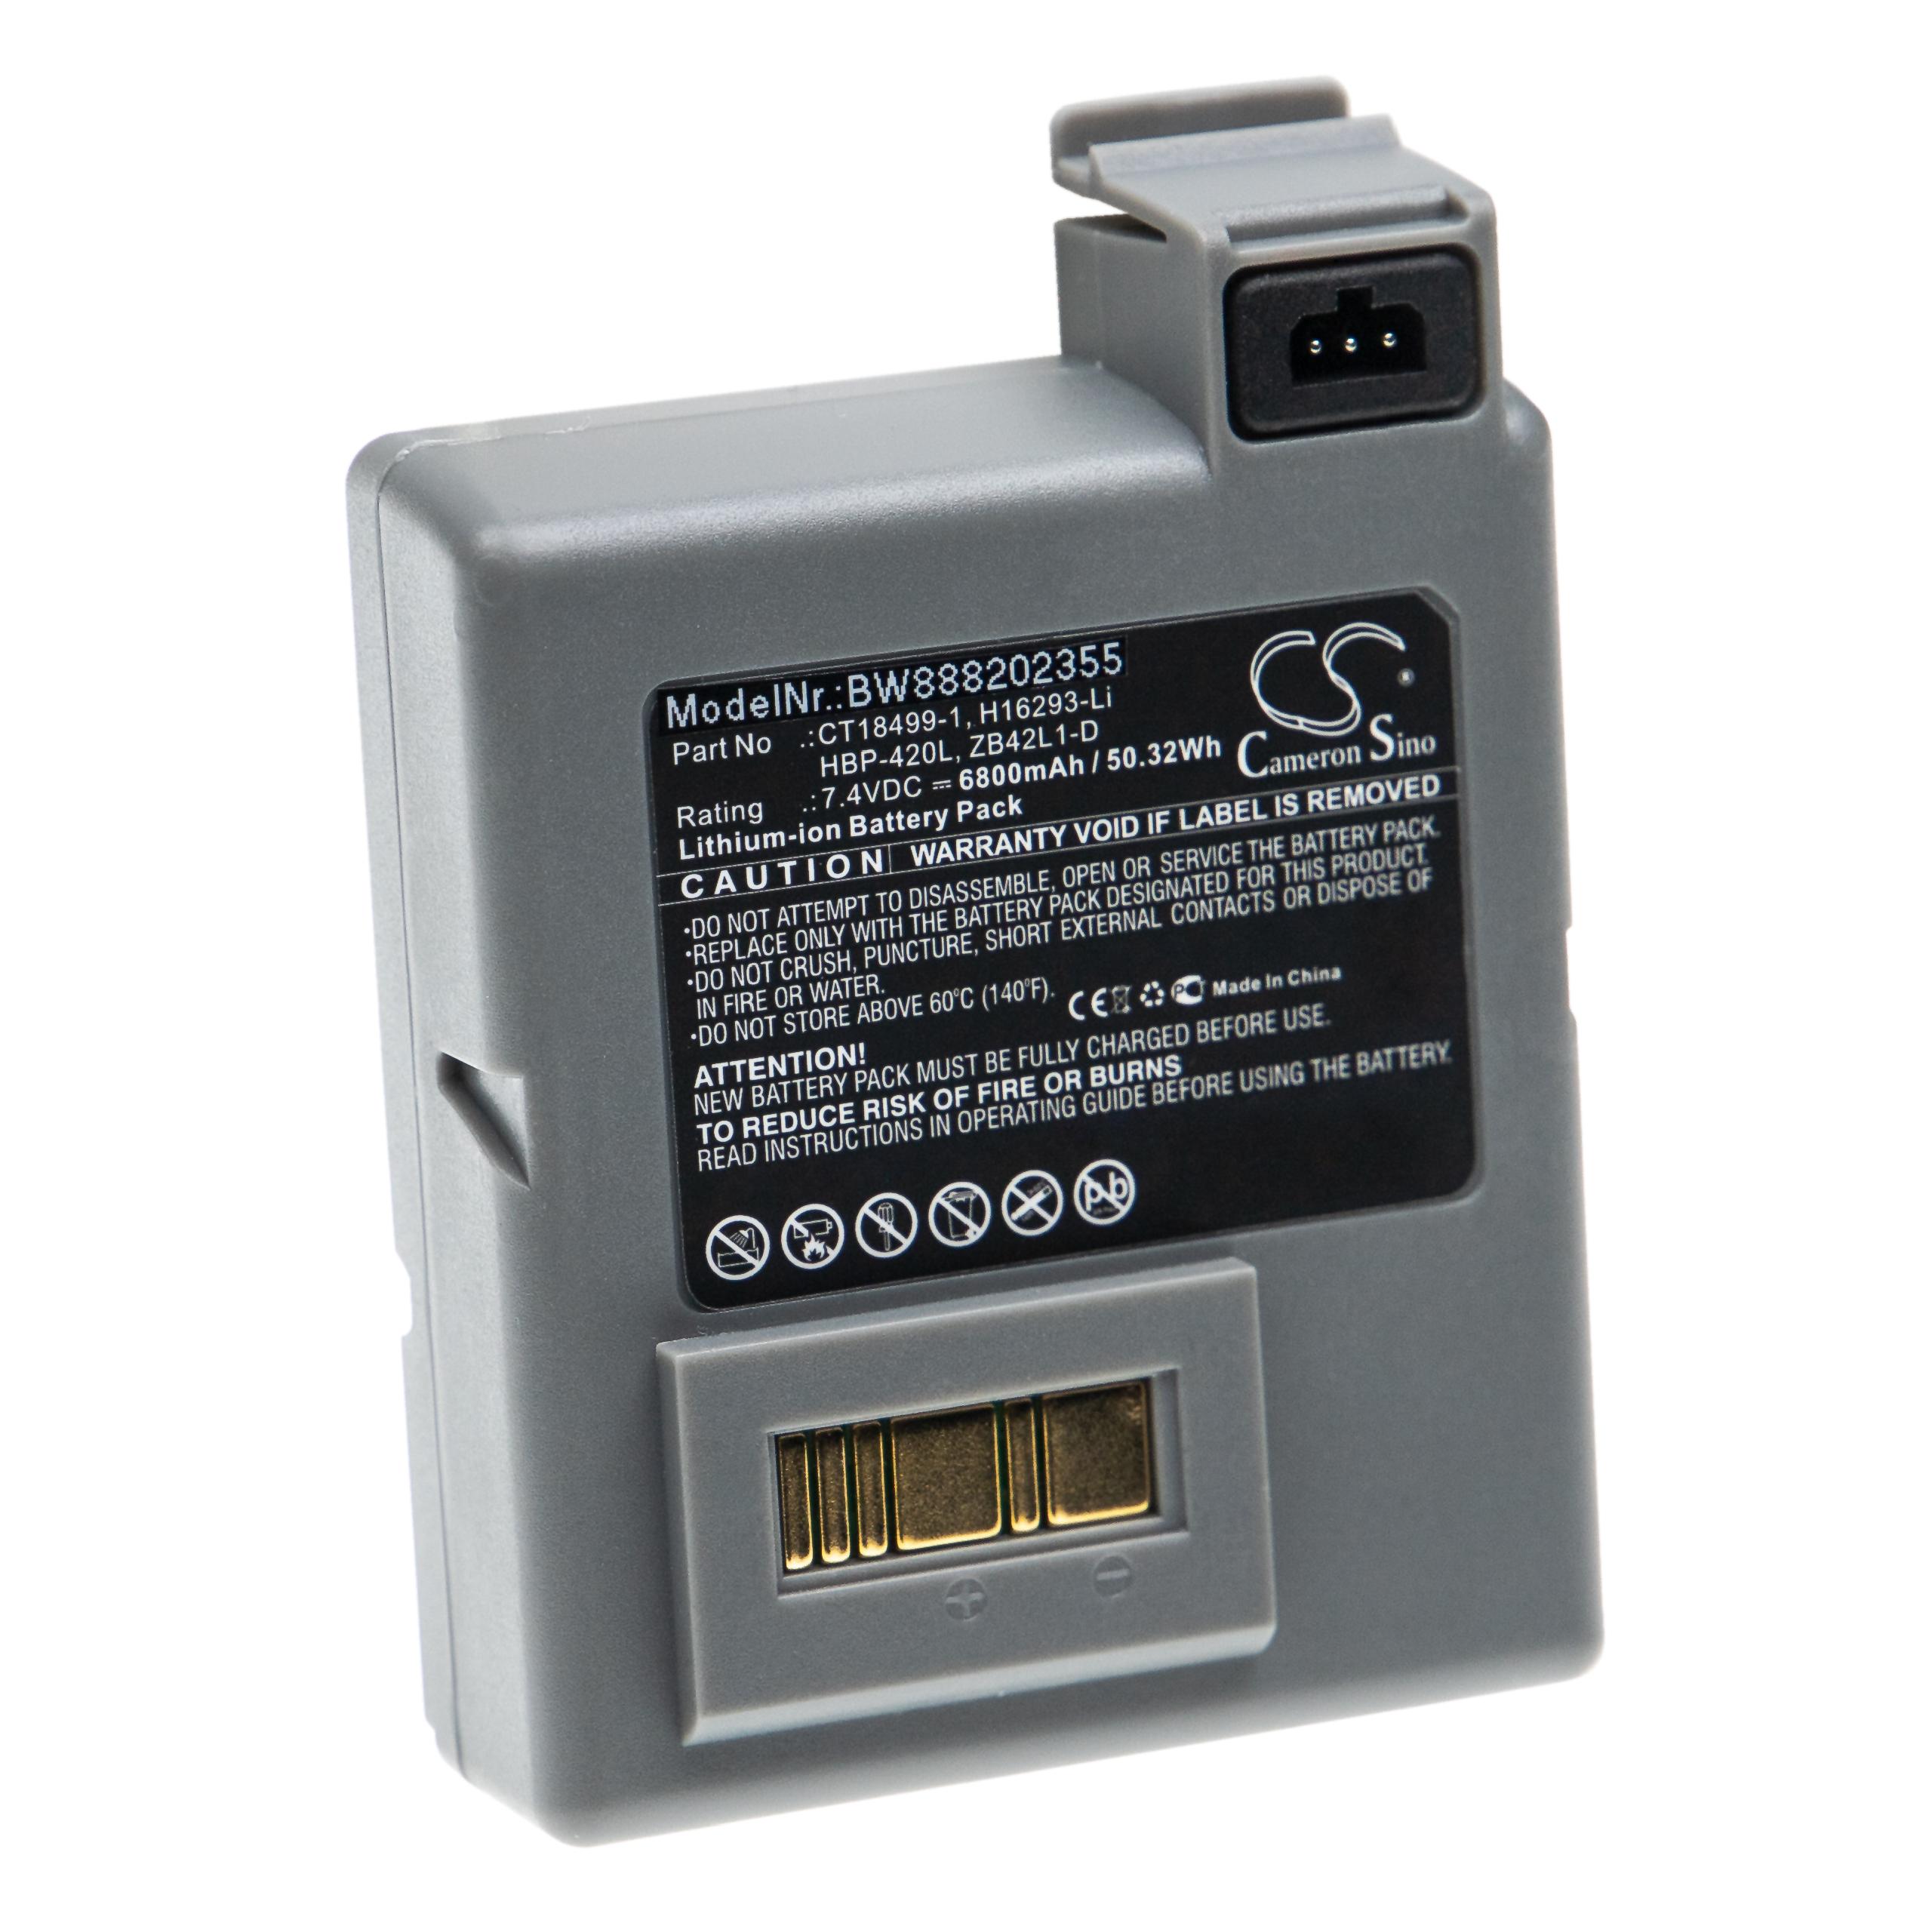 Akumulator do drukarki / drukarki etykiet zamiennik Zebra H16293-Li, CT18499-1 - 6800 mAh 7,4 V Li-Ion